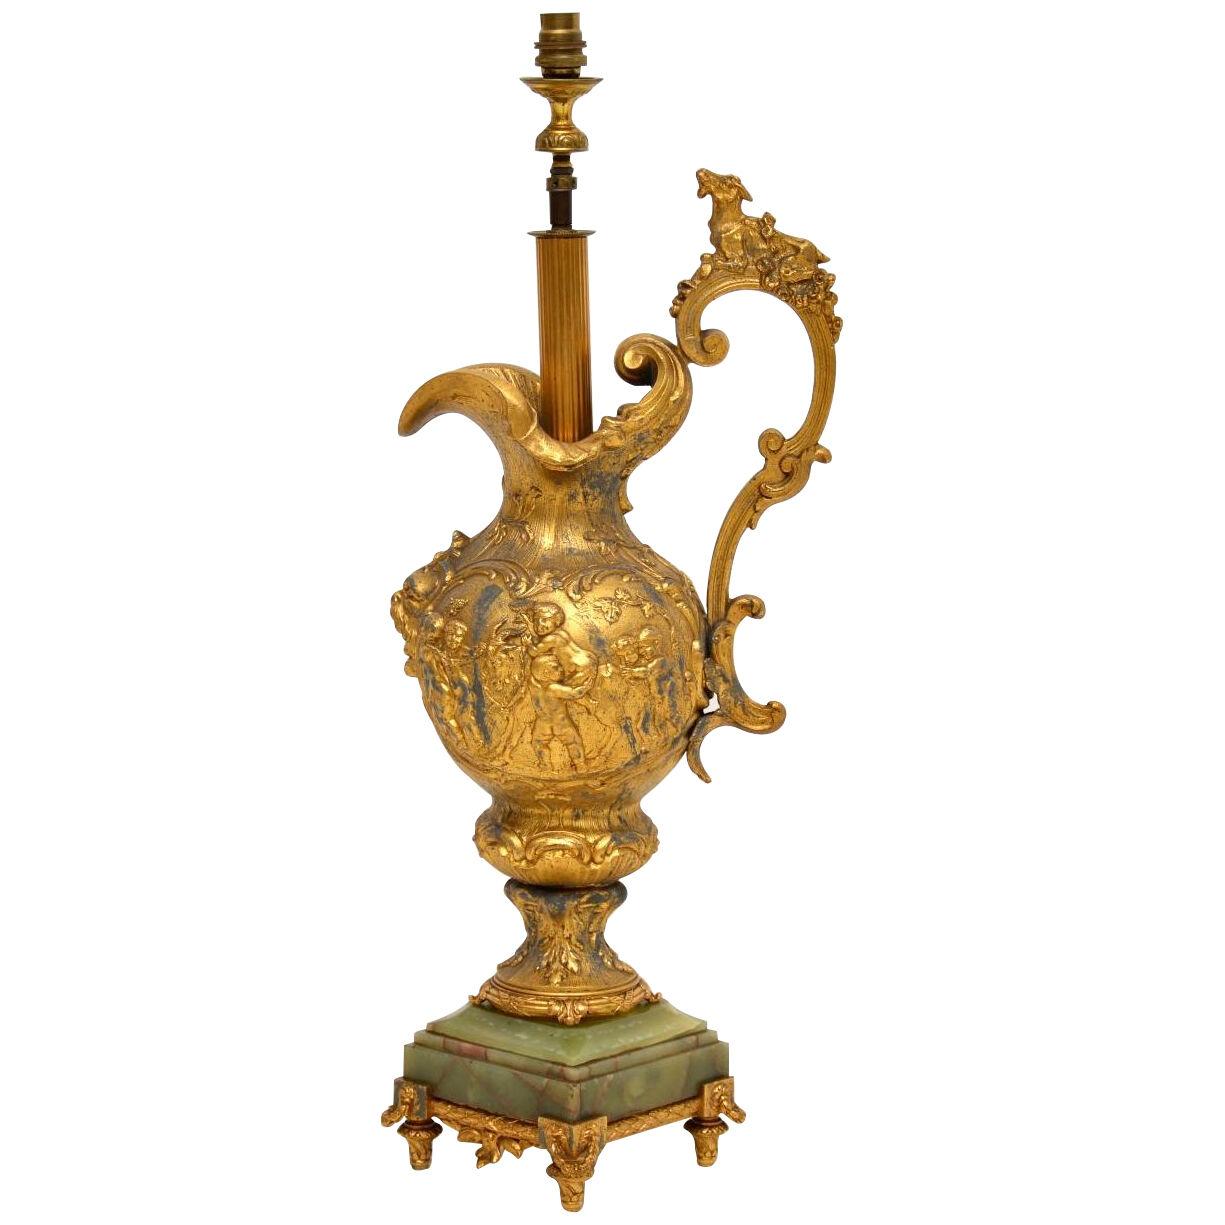  Large Antique Gilt Metal Flagon Lamp